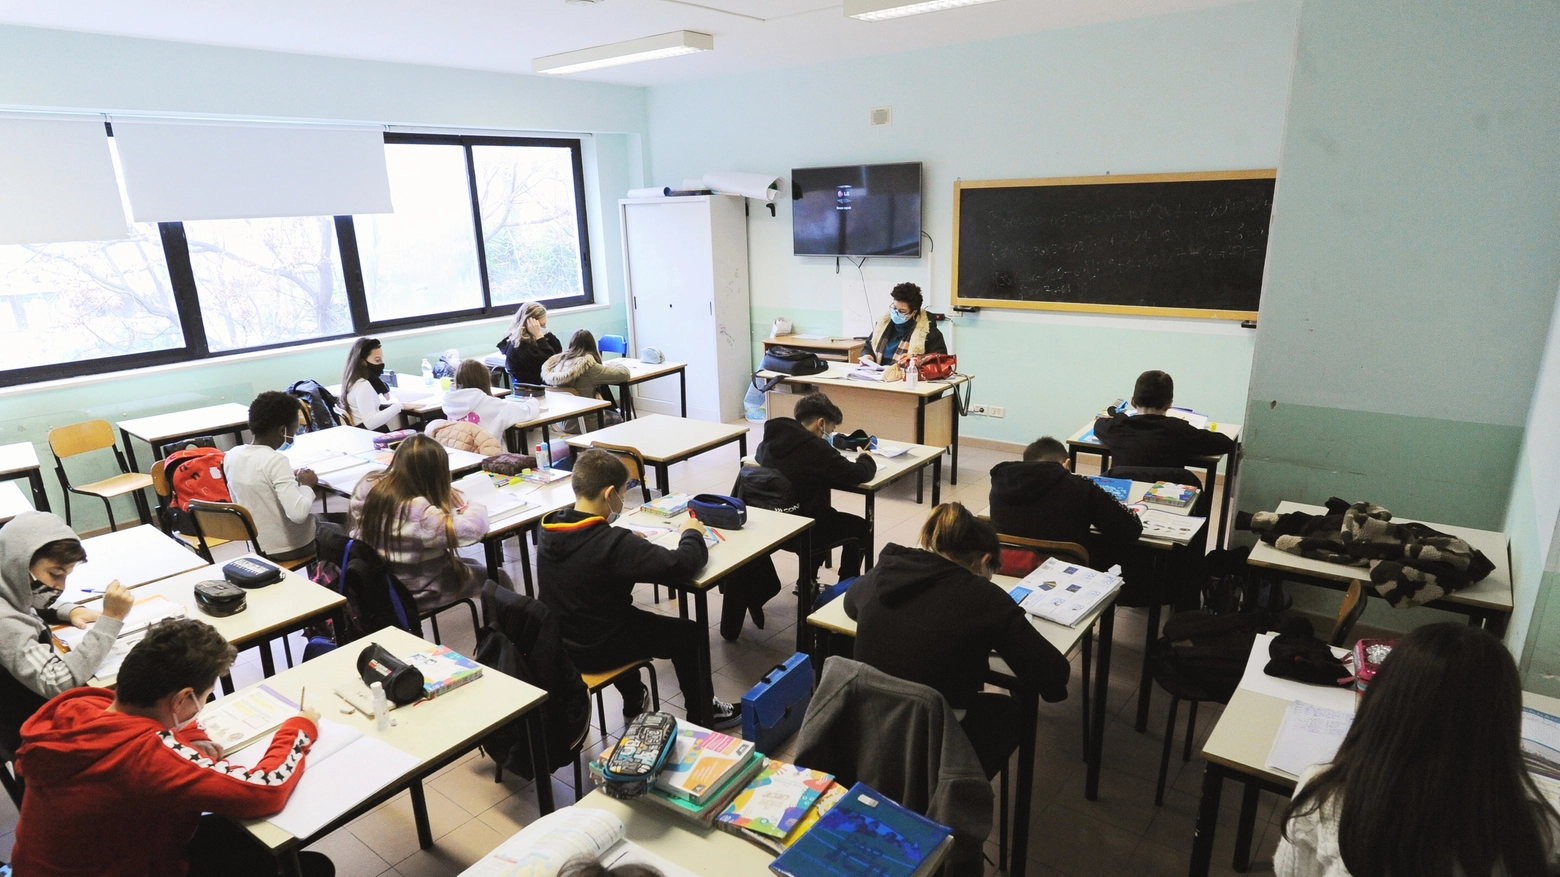 Studenti in classe (ImagoE)